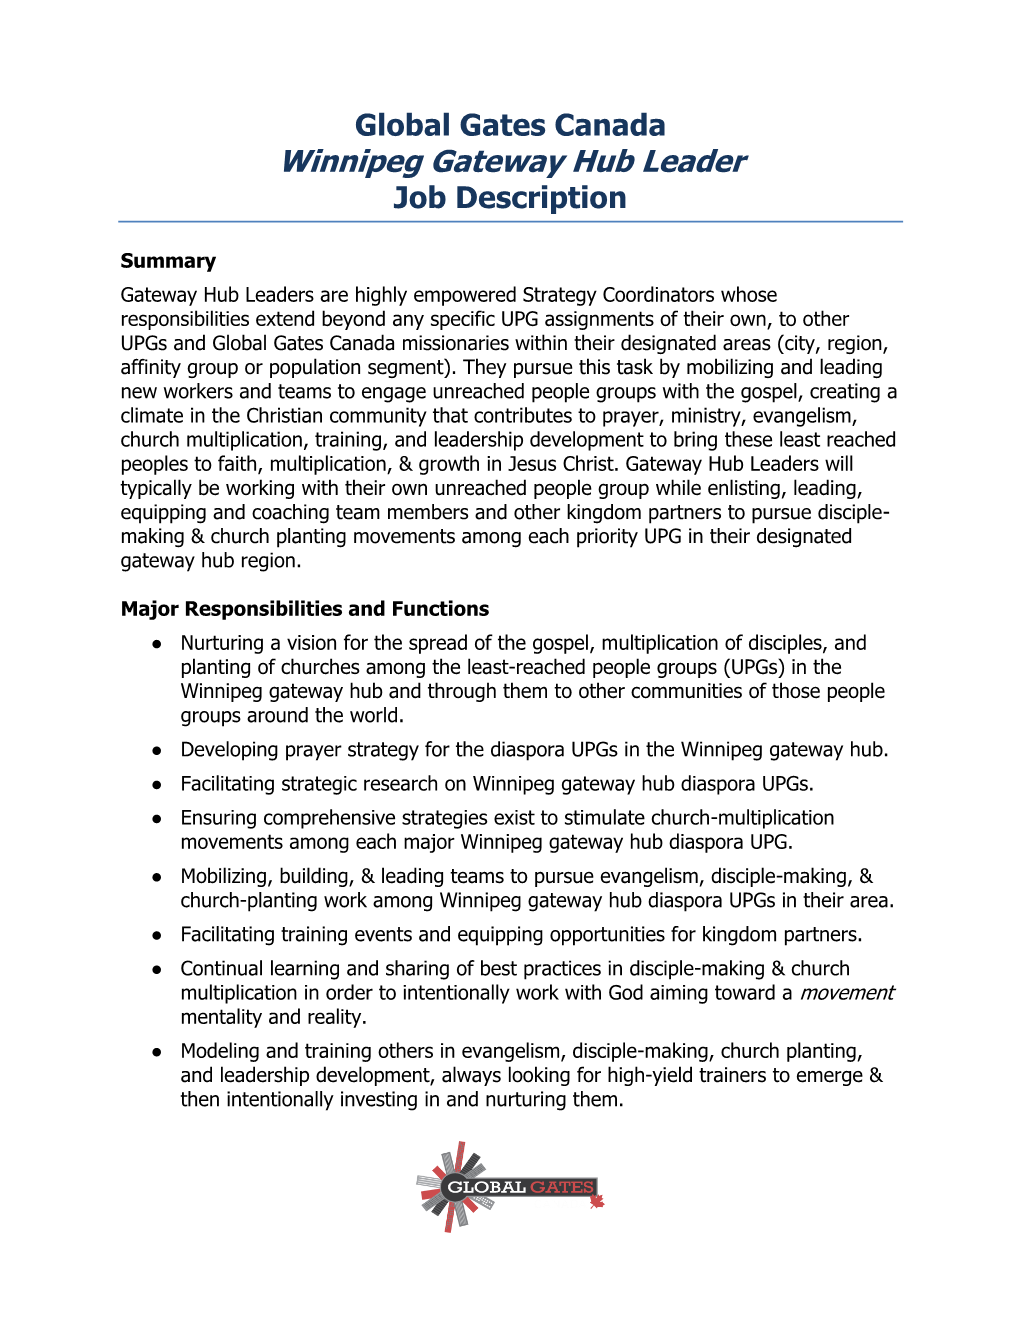 Winnipeg Gateway Hub Leader Job Description